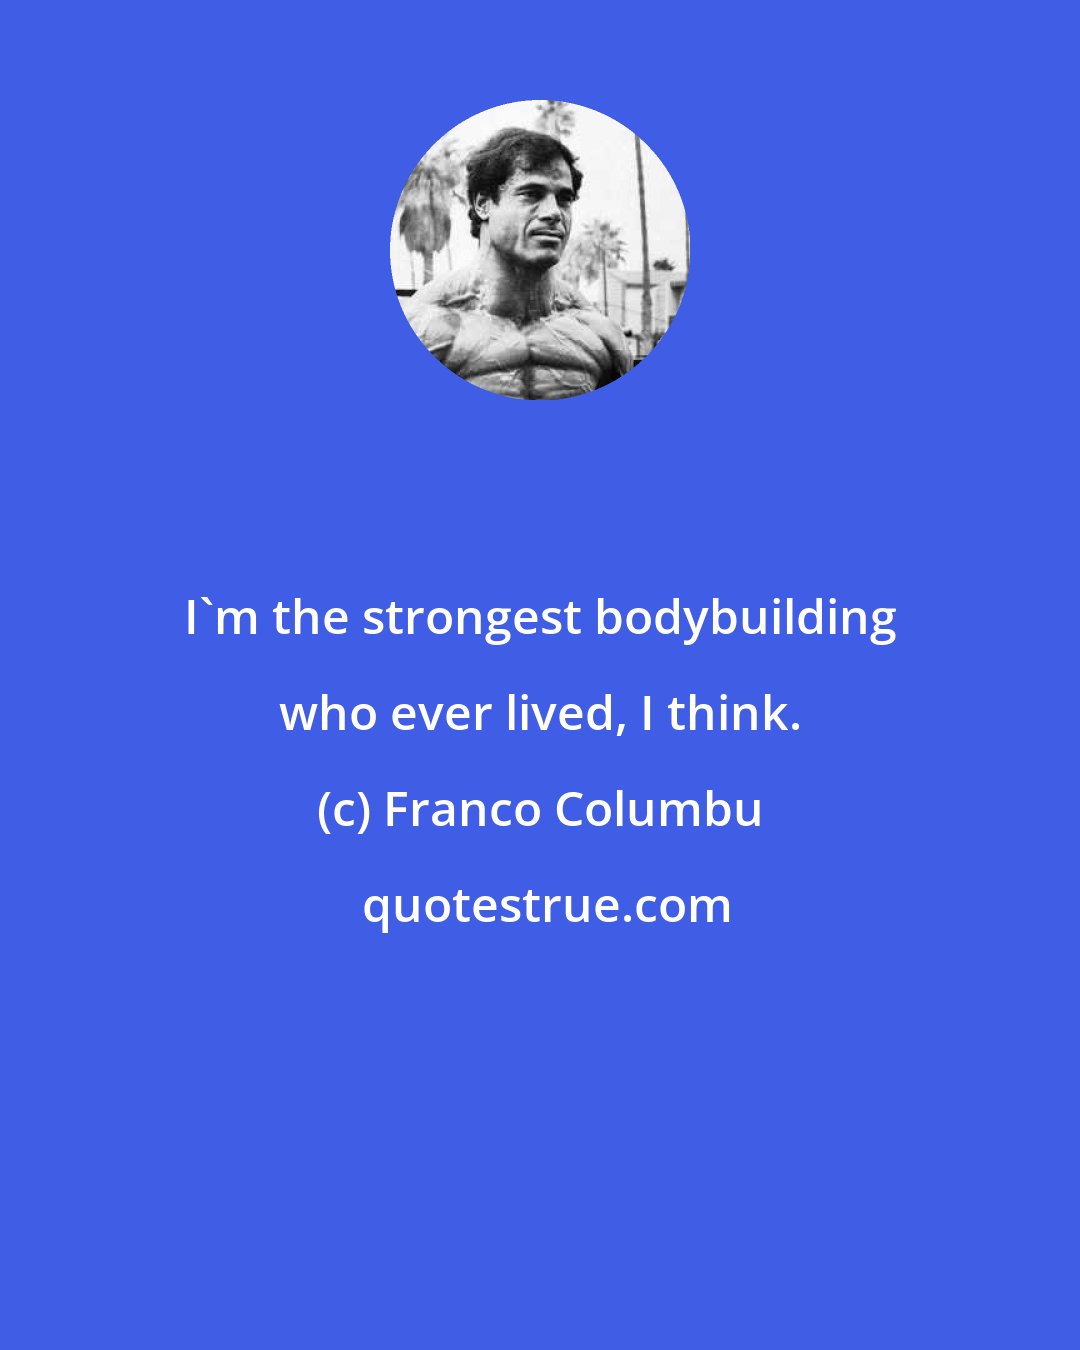 Franco Columbu: I'm the strongest bodybuilding who ever lived, I think.